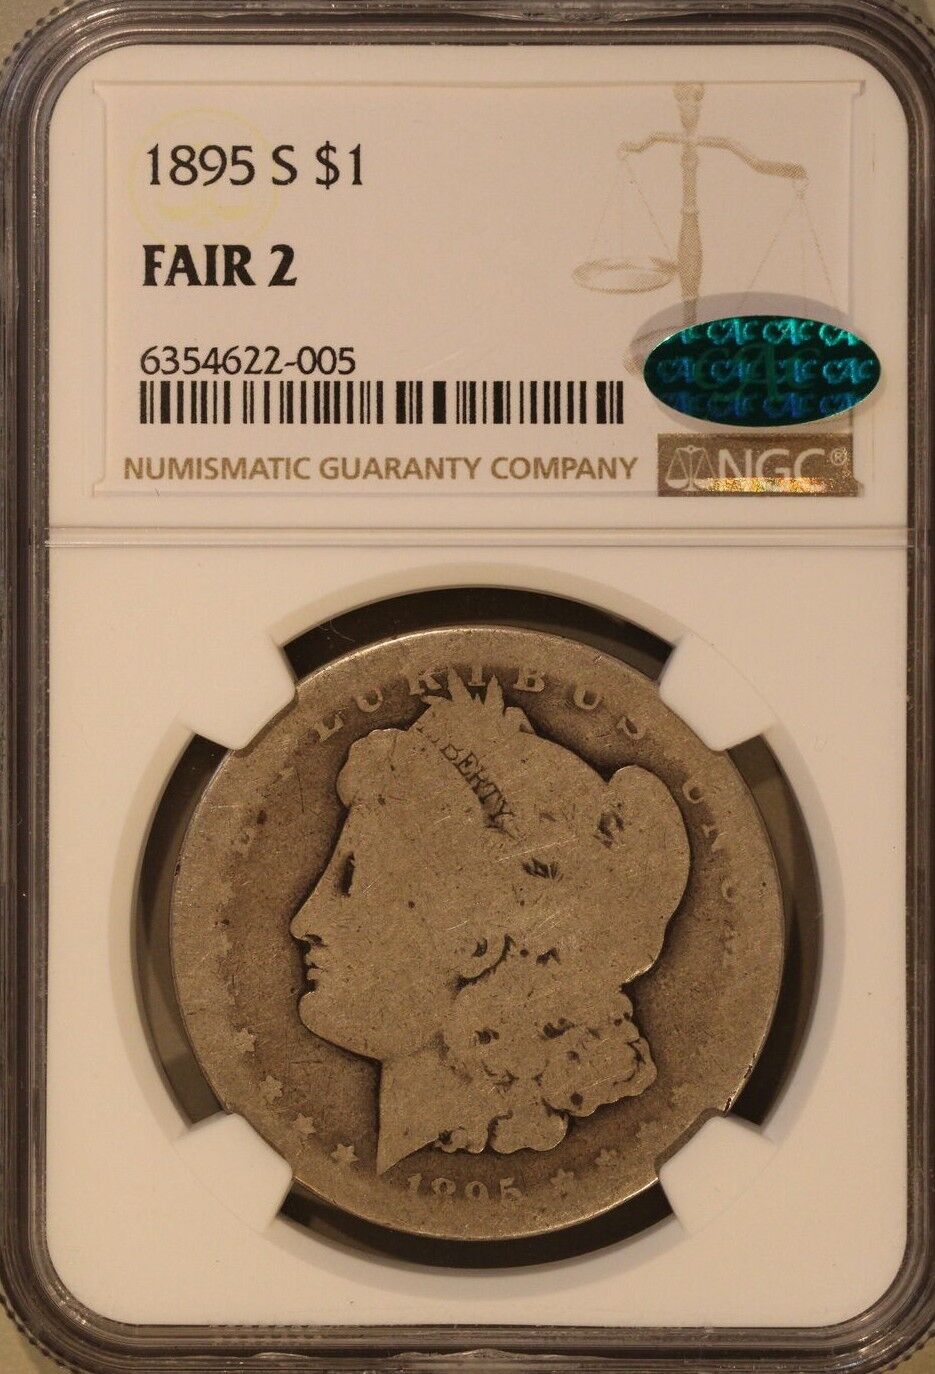 1895-S (FR2 CAC) Morgan Silver Dollar $1 NGC - Fair 2 - LOWBALL